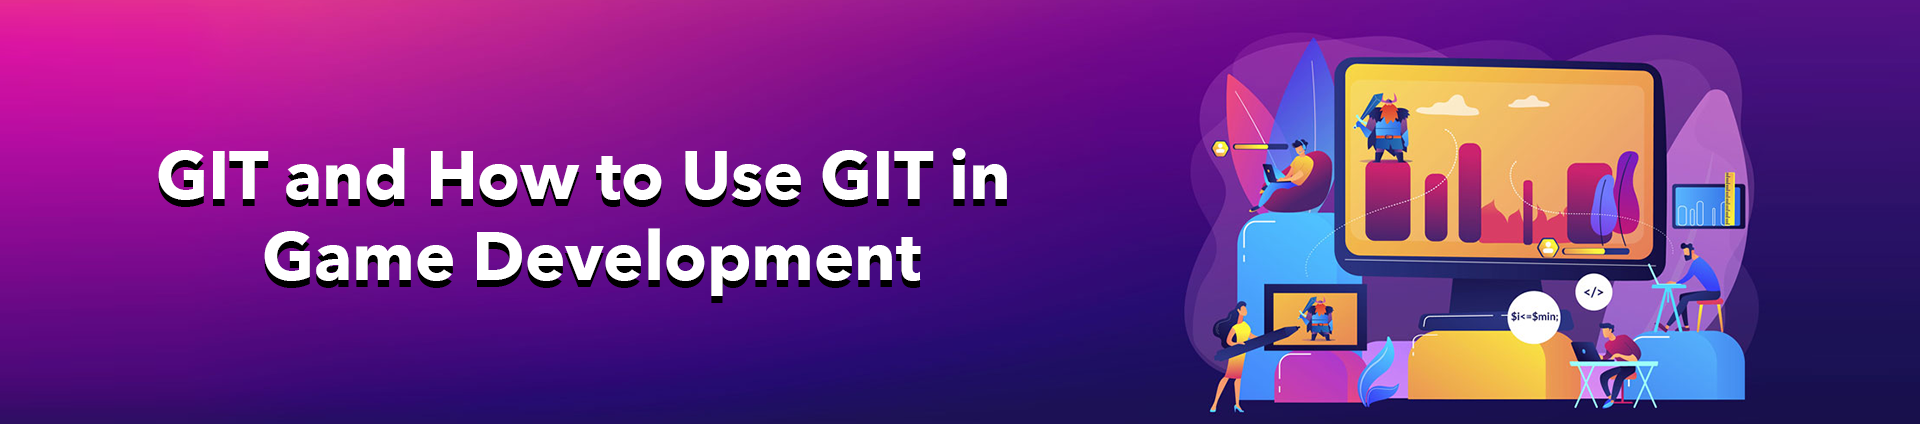 GIT in Game Development